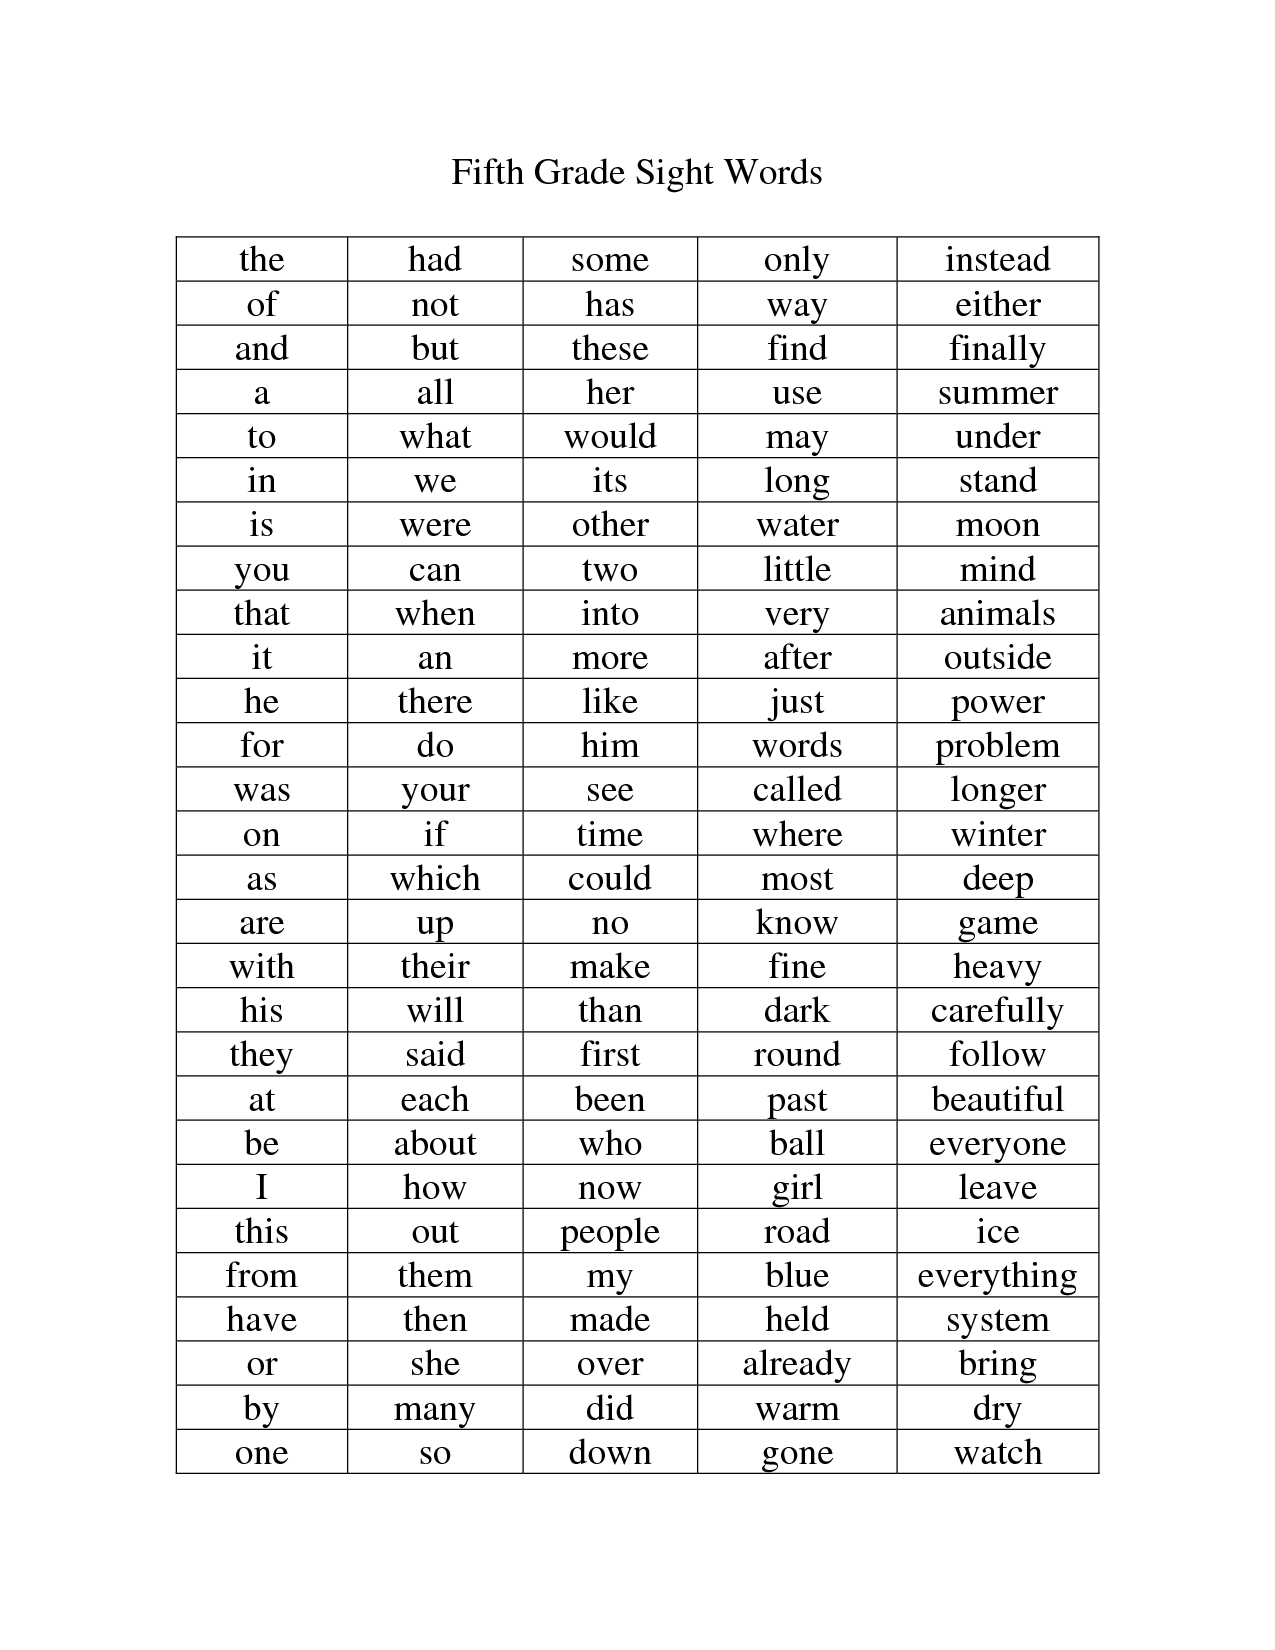 6th grade sight word list pdf